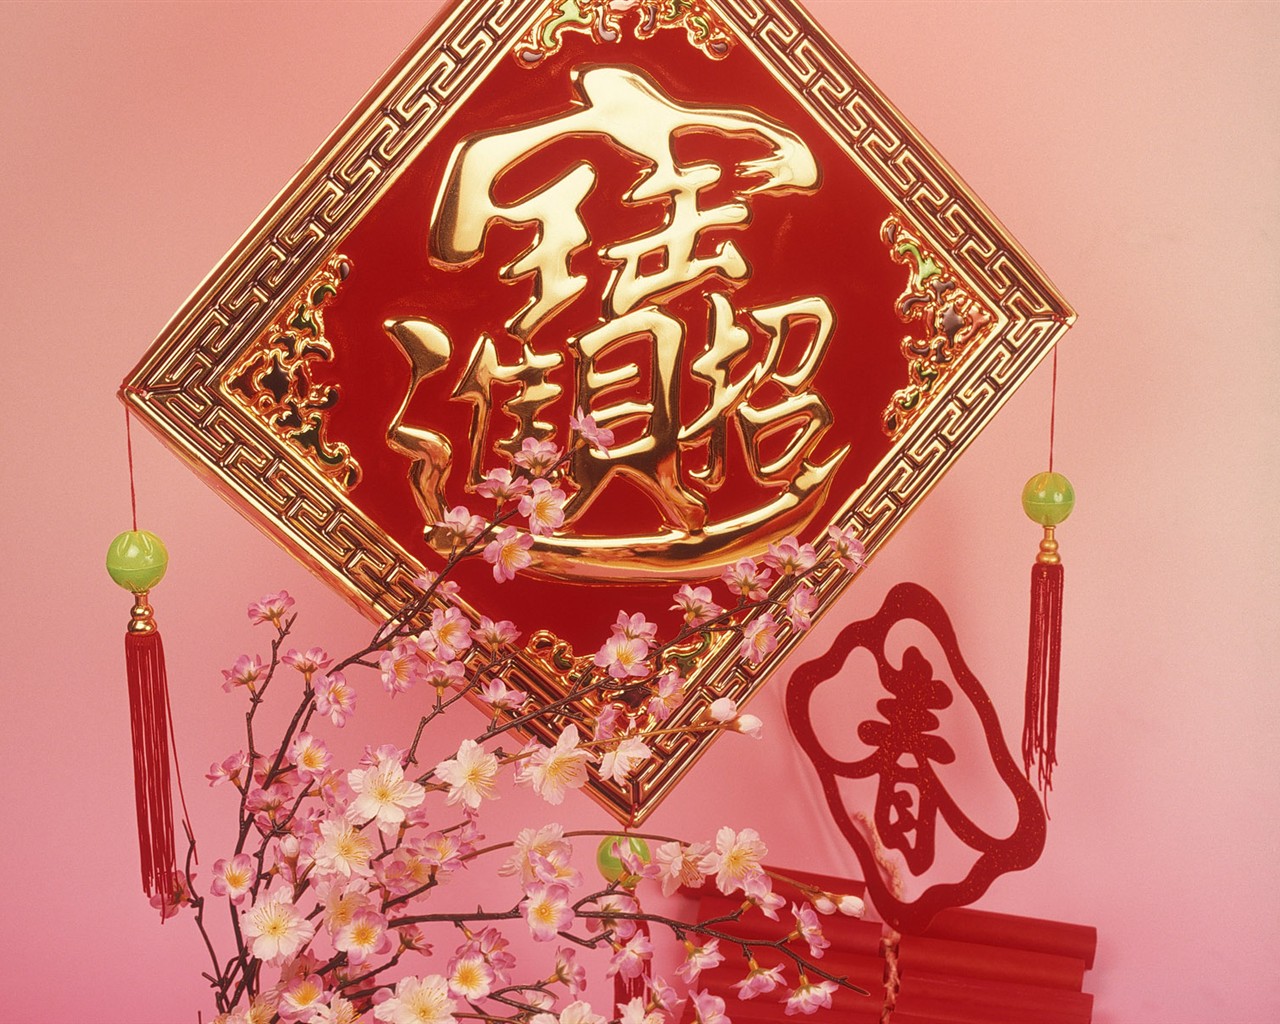 China Wind festive red wallpaper #26 - 1280x1024